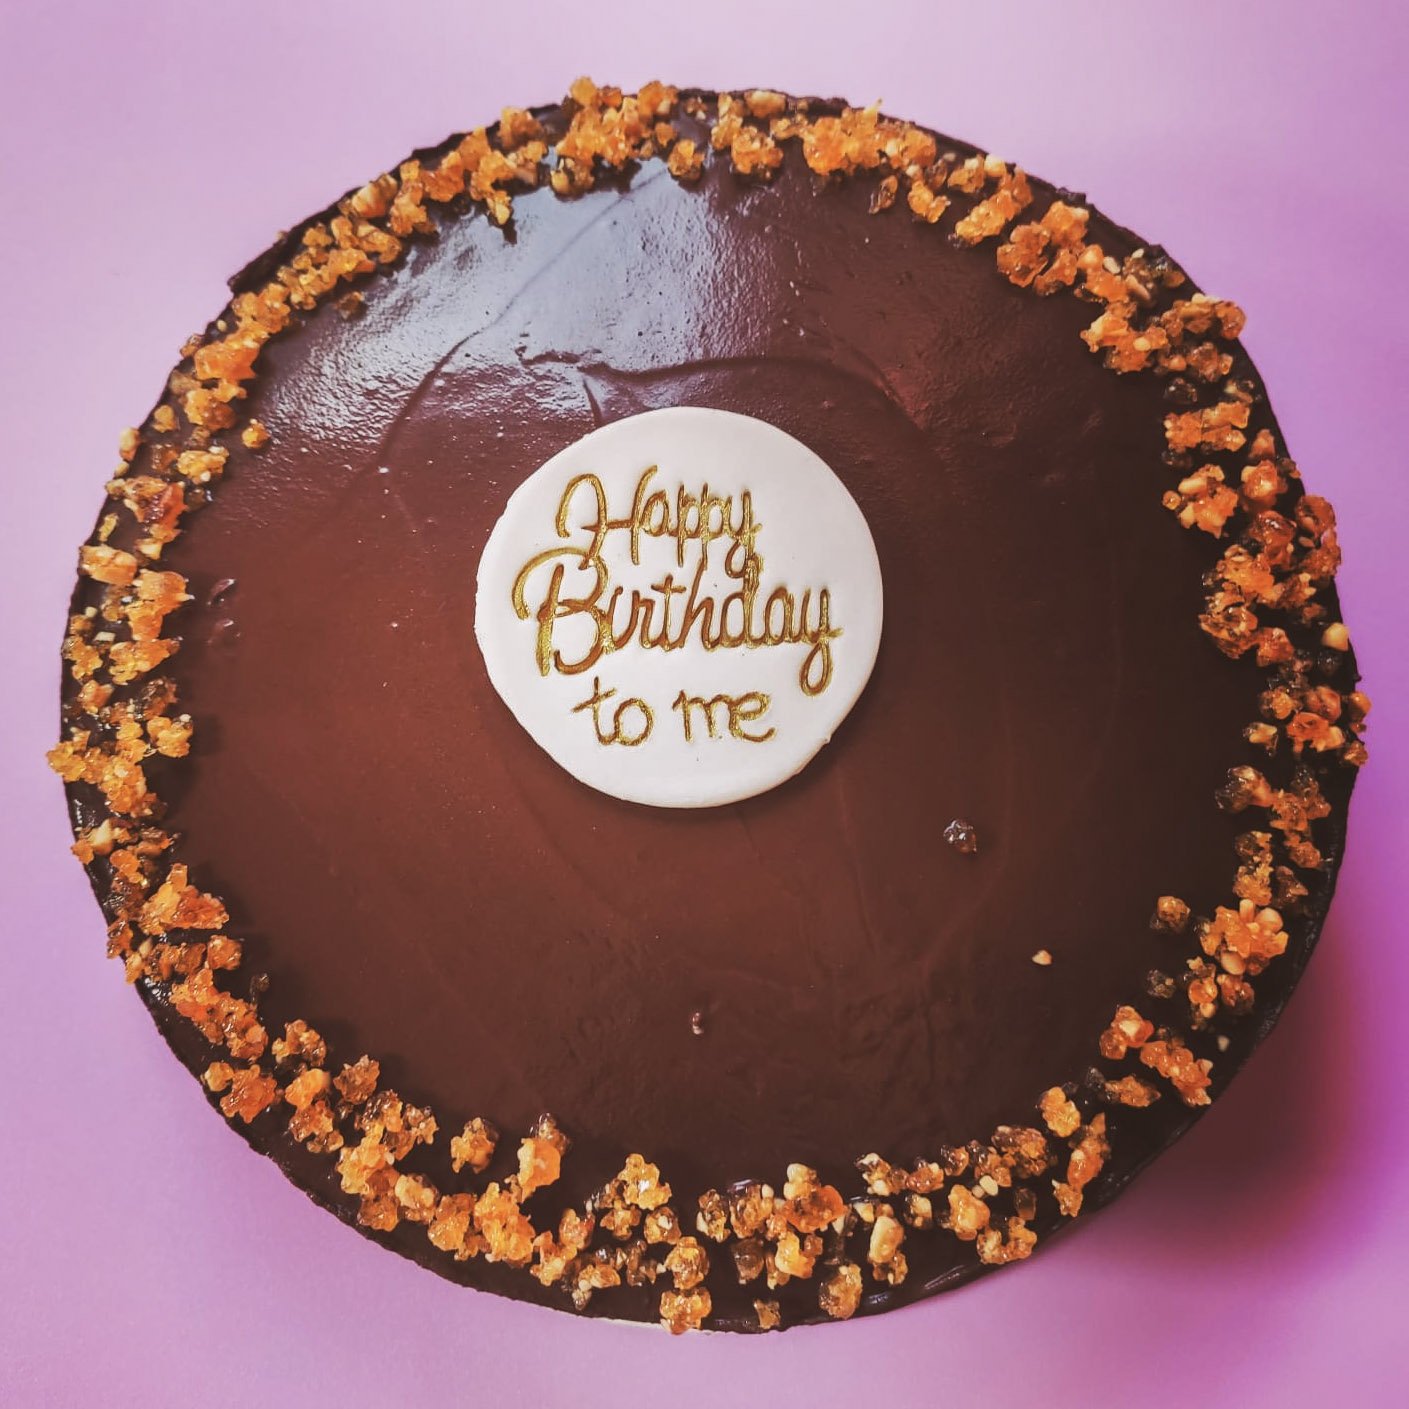 Hot chocolate fudge cake | RecipeTin Eats